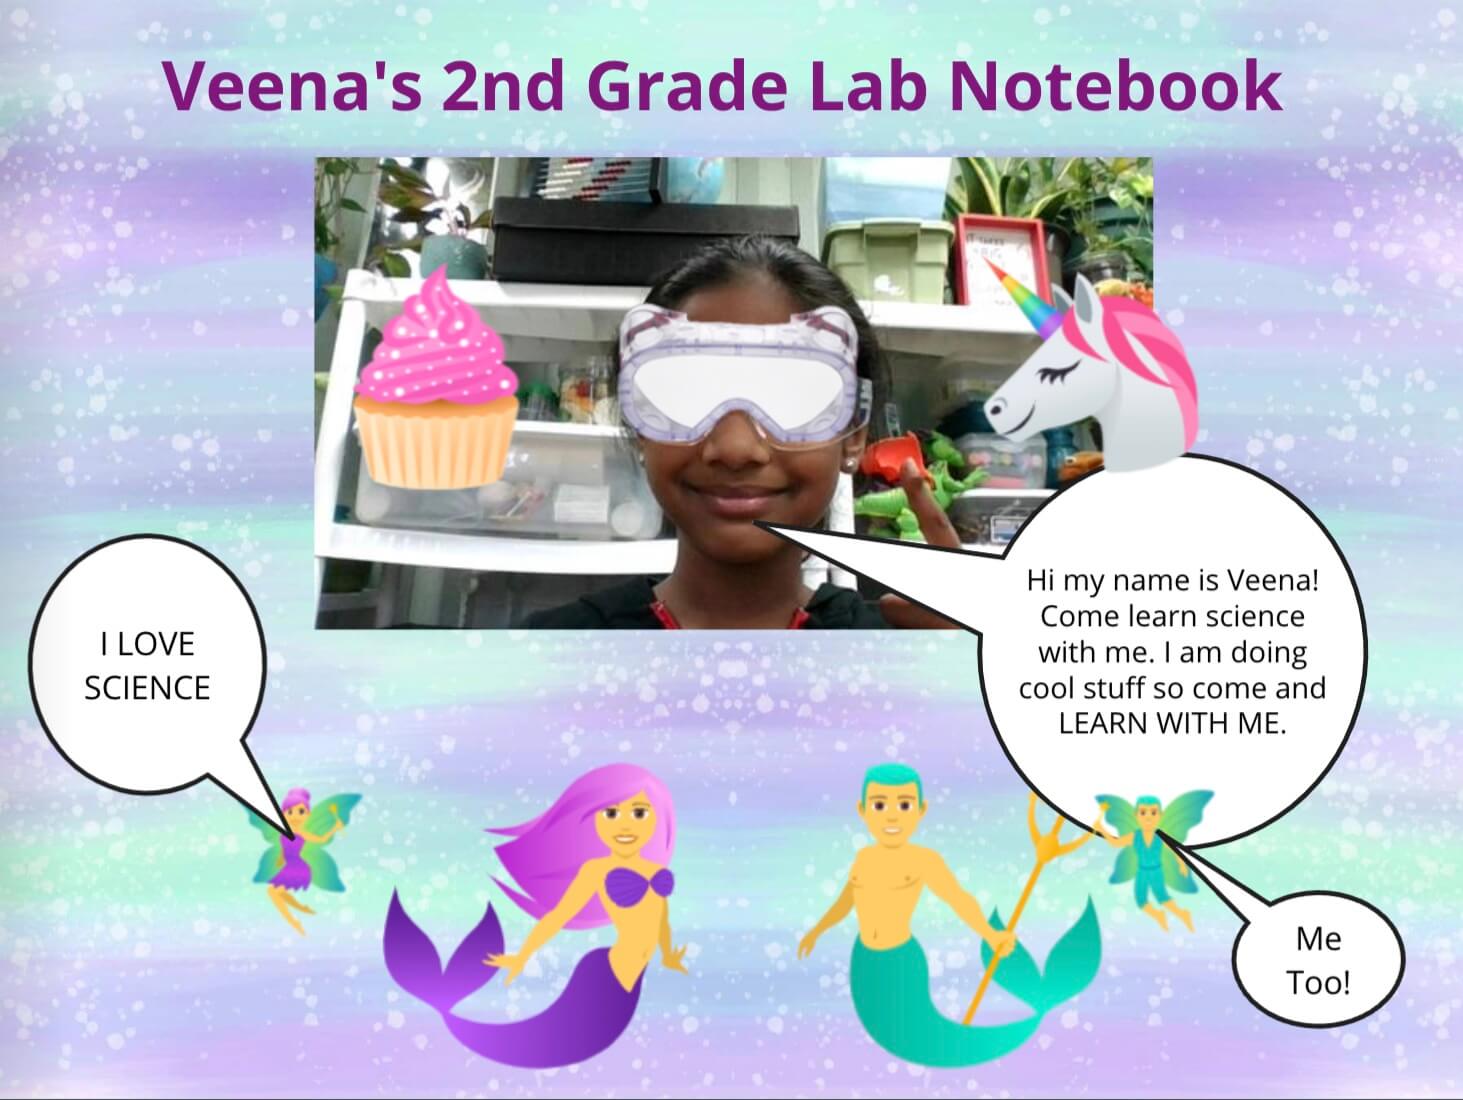 Veena's 2nd grade lab notebook